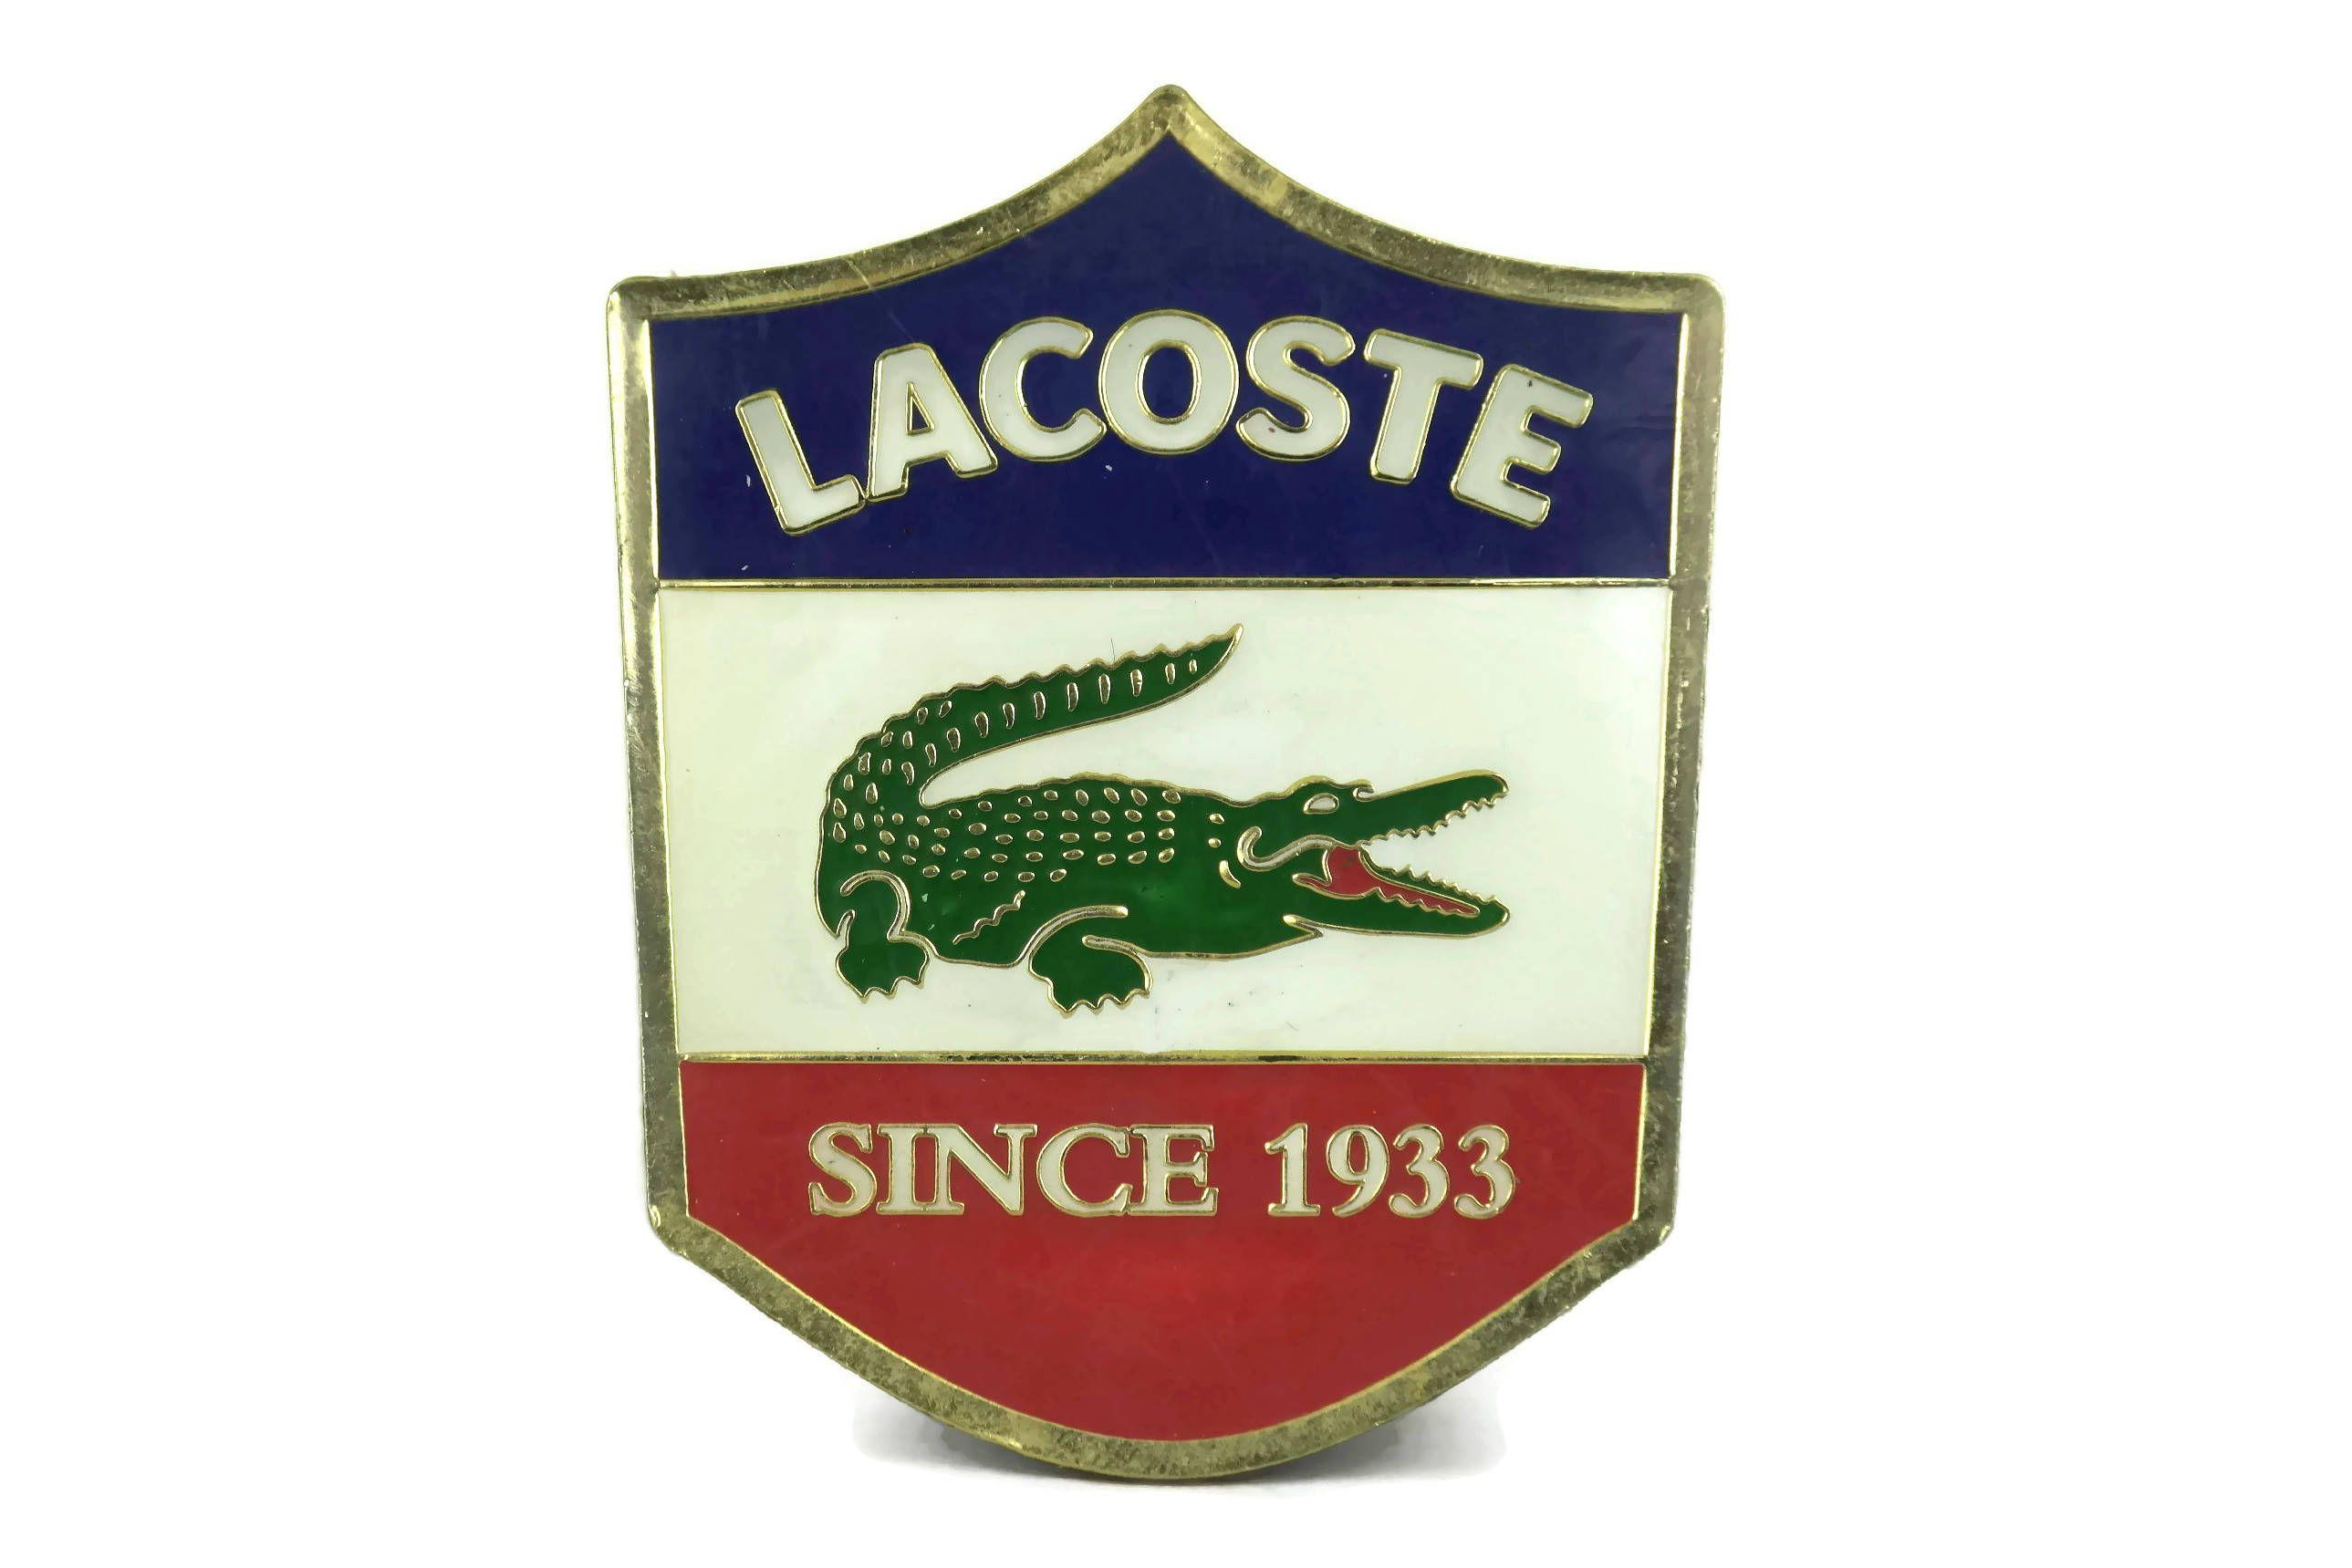 French Crocodile Logo - Vintage Lacoste Advertising Badge with Crocodile. French Blue, White ...